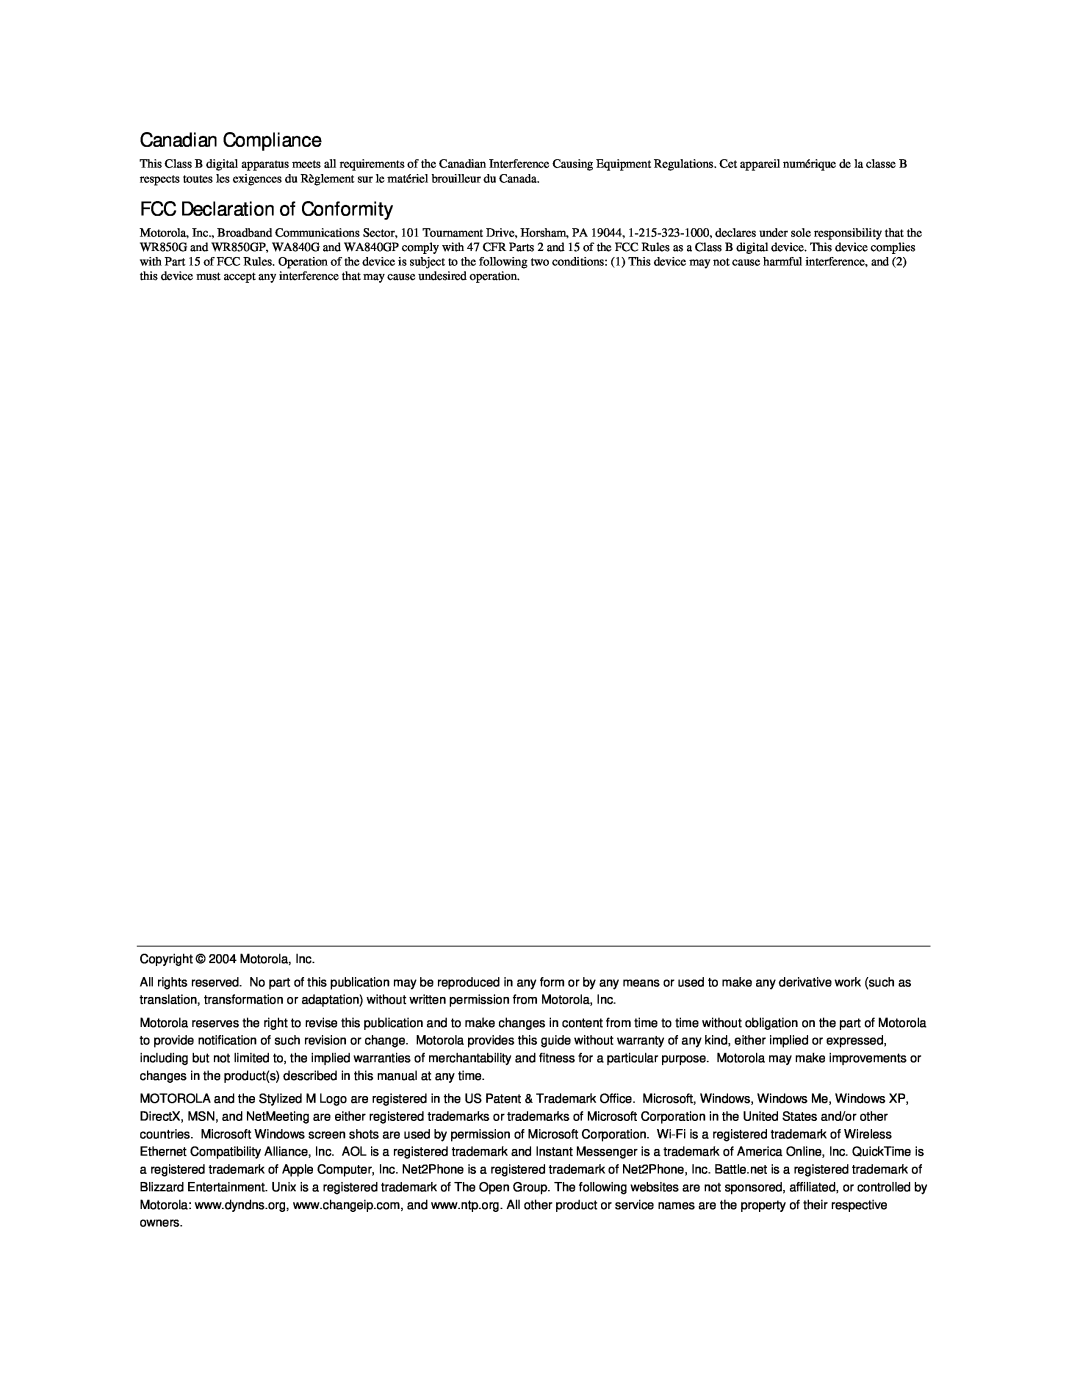 Motorola WR850 manual Canadian Compliance, FCC Declaration of Conformity 